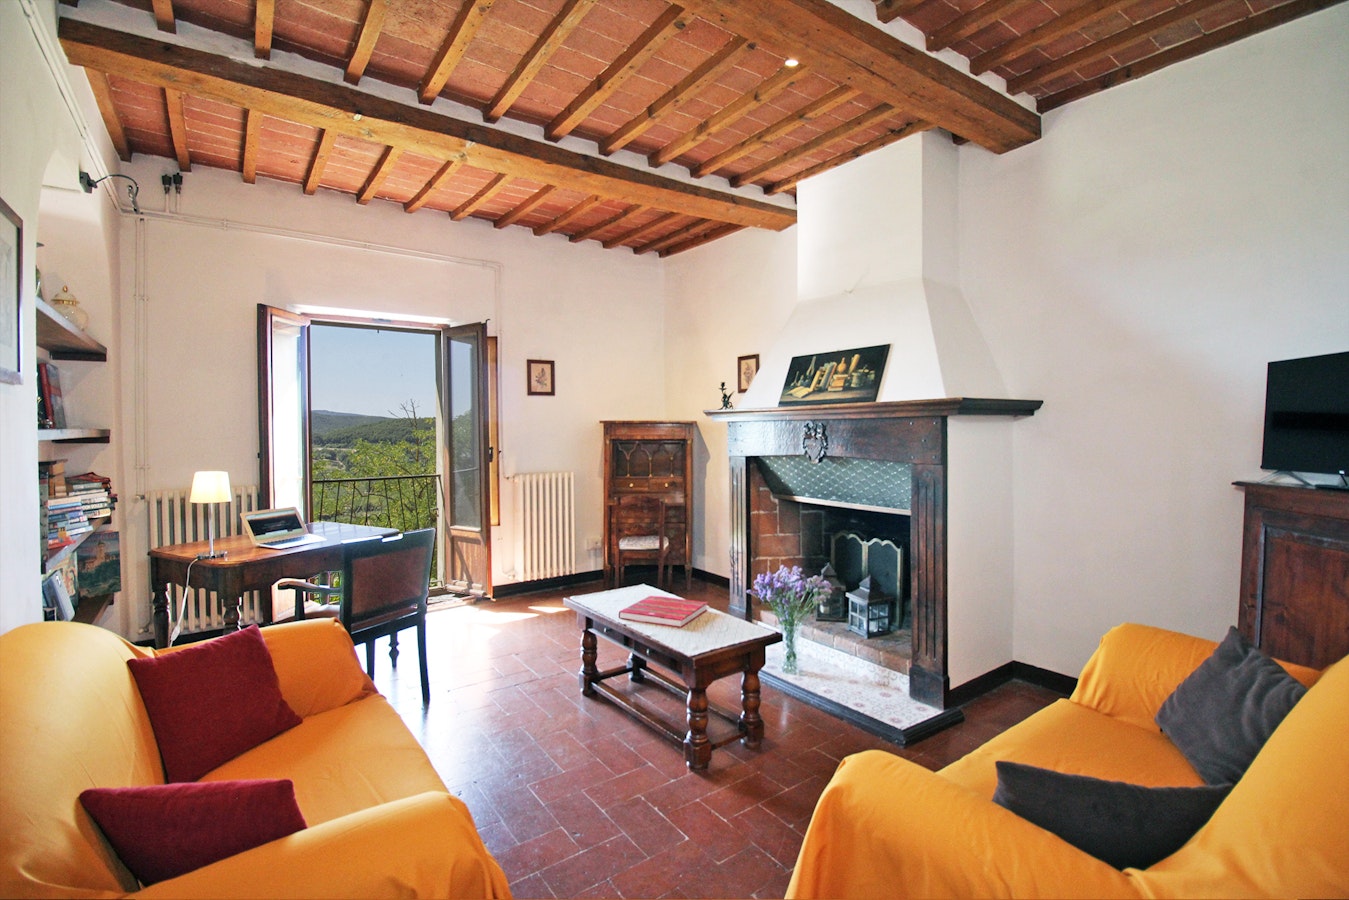 https://img.tuscanyaccommodation.com/properties/politian-apartments/black-tea-living-area-fireplace.jpg?fit=clip&h=900